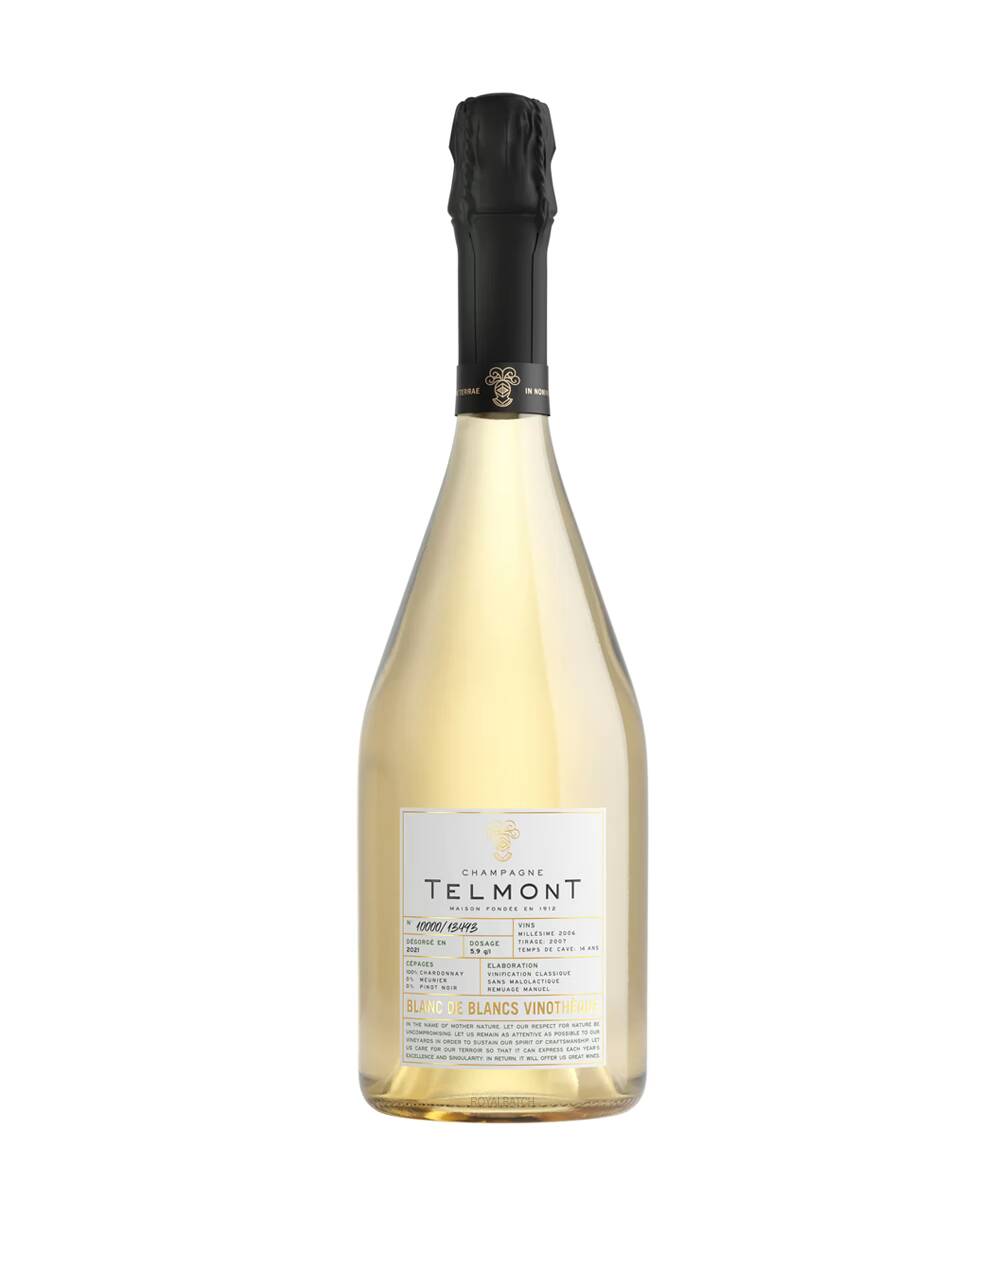 Telmont Blanc De Blancs Vinotheque 2006 Champagne